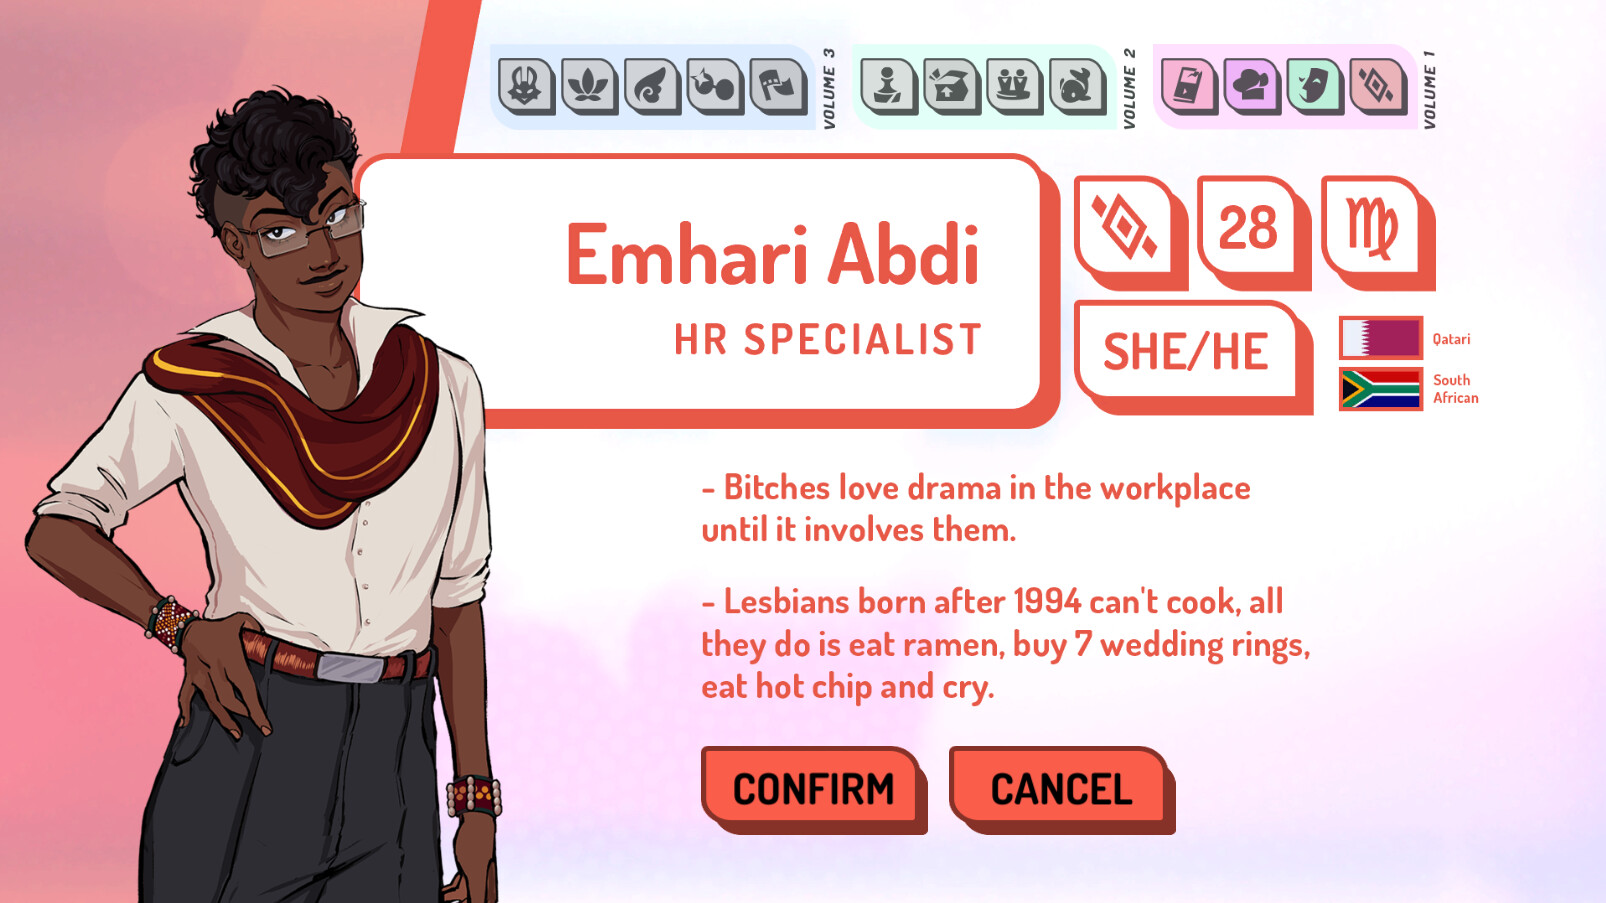 Emhari's profile page in ValiDate.